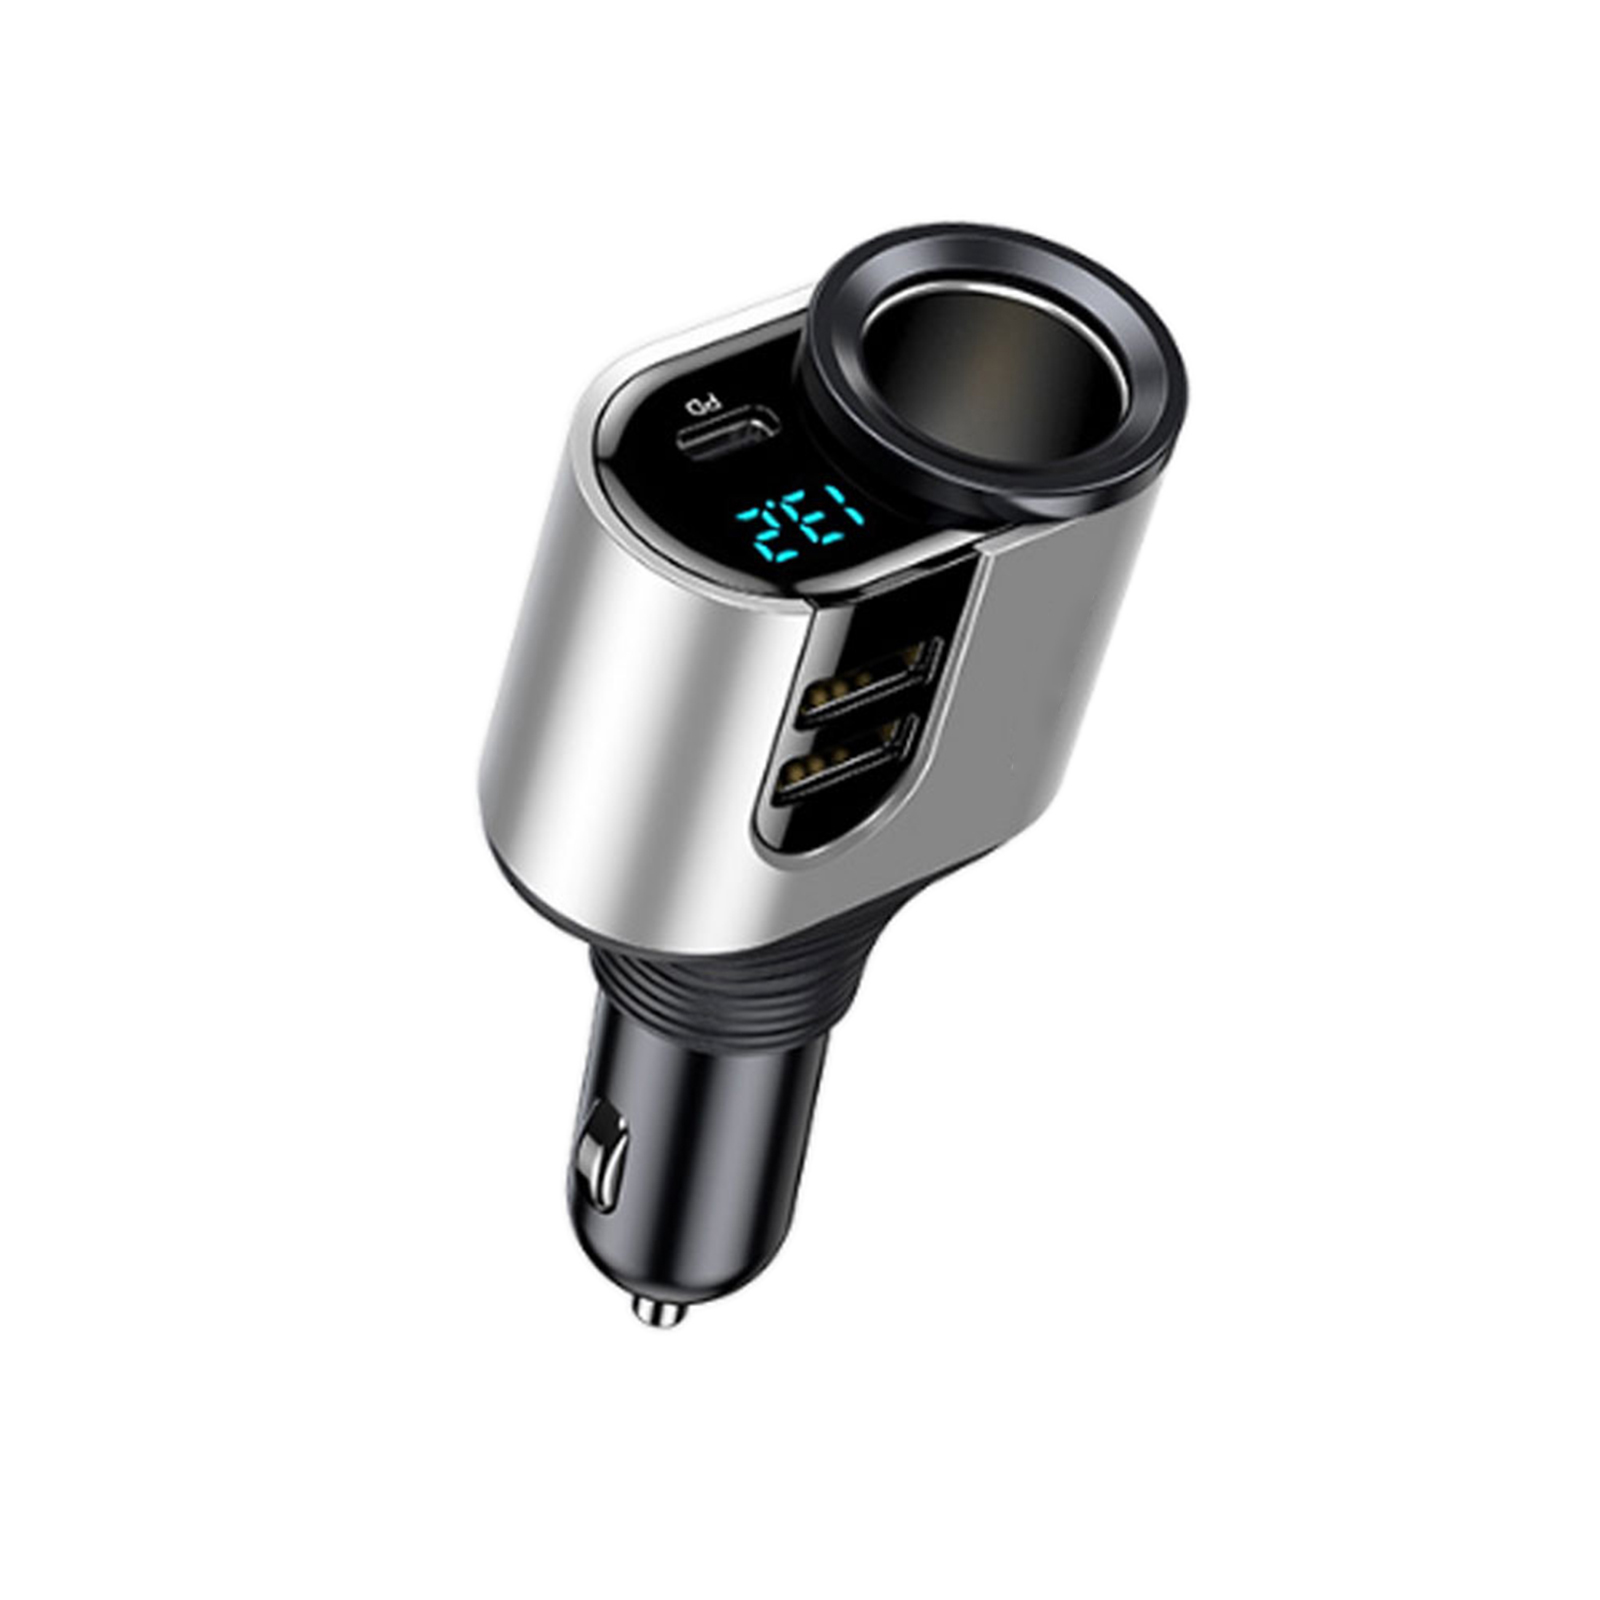 3 In 1 USB Car Charger 12-24V Cigarette Lighter Adapter Multi Ports USB PD Fast Charging Socket Splitter